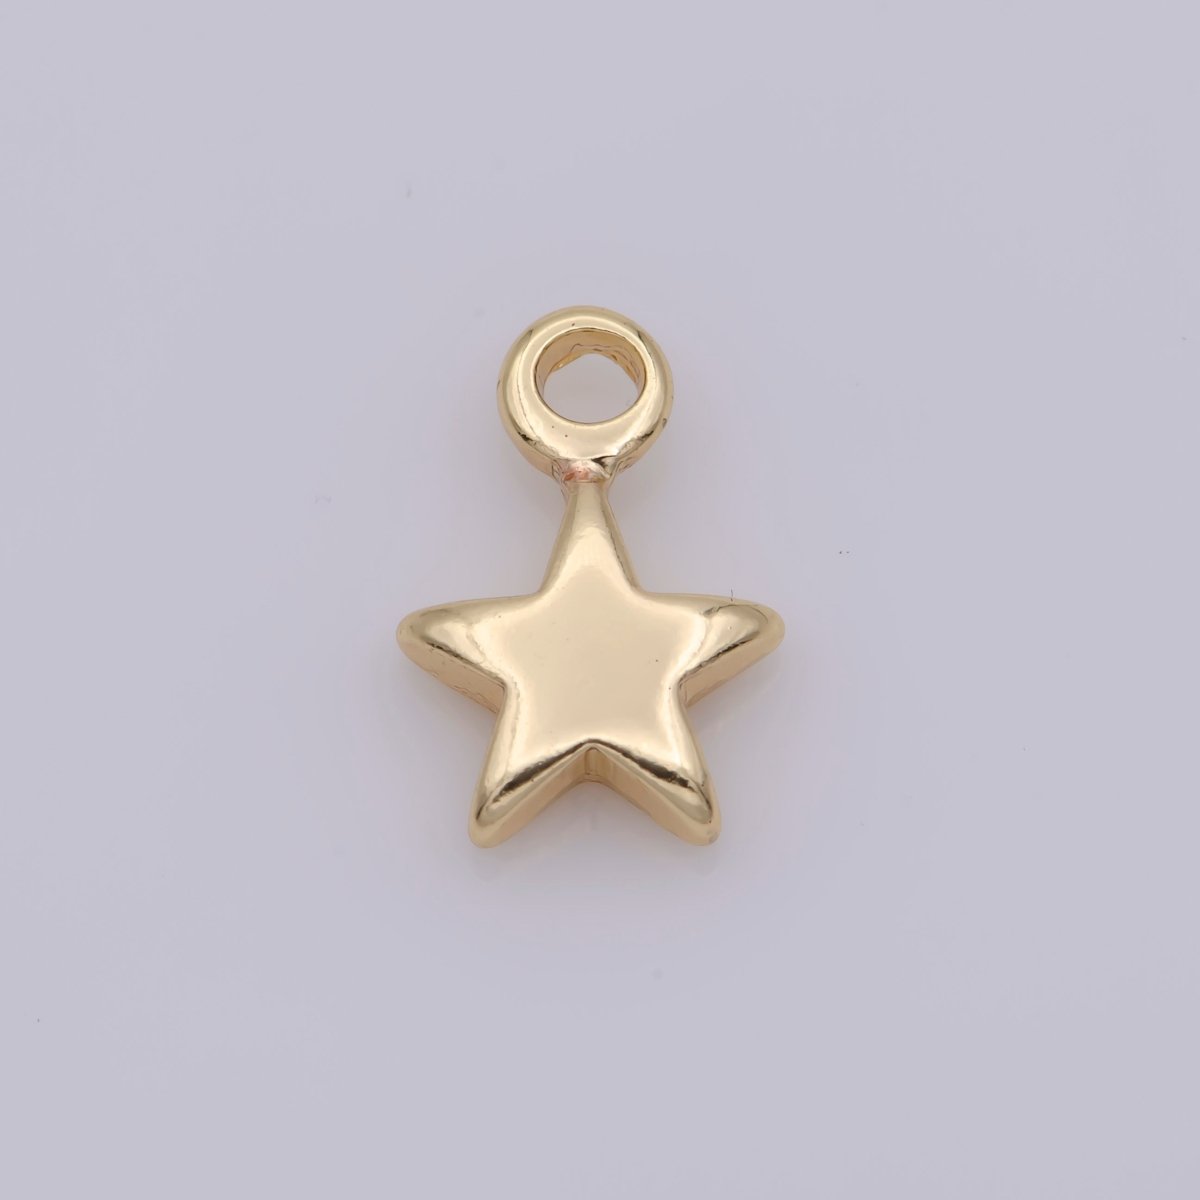 Tiny Gold Filled Star Charm Mini Star Charm for Bracelet Necklace Earring Celestial Jewelry Making Wholesale Bulk Charm AC-1443 - DLUXCA